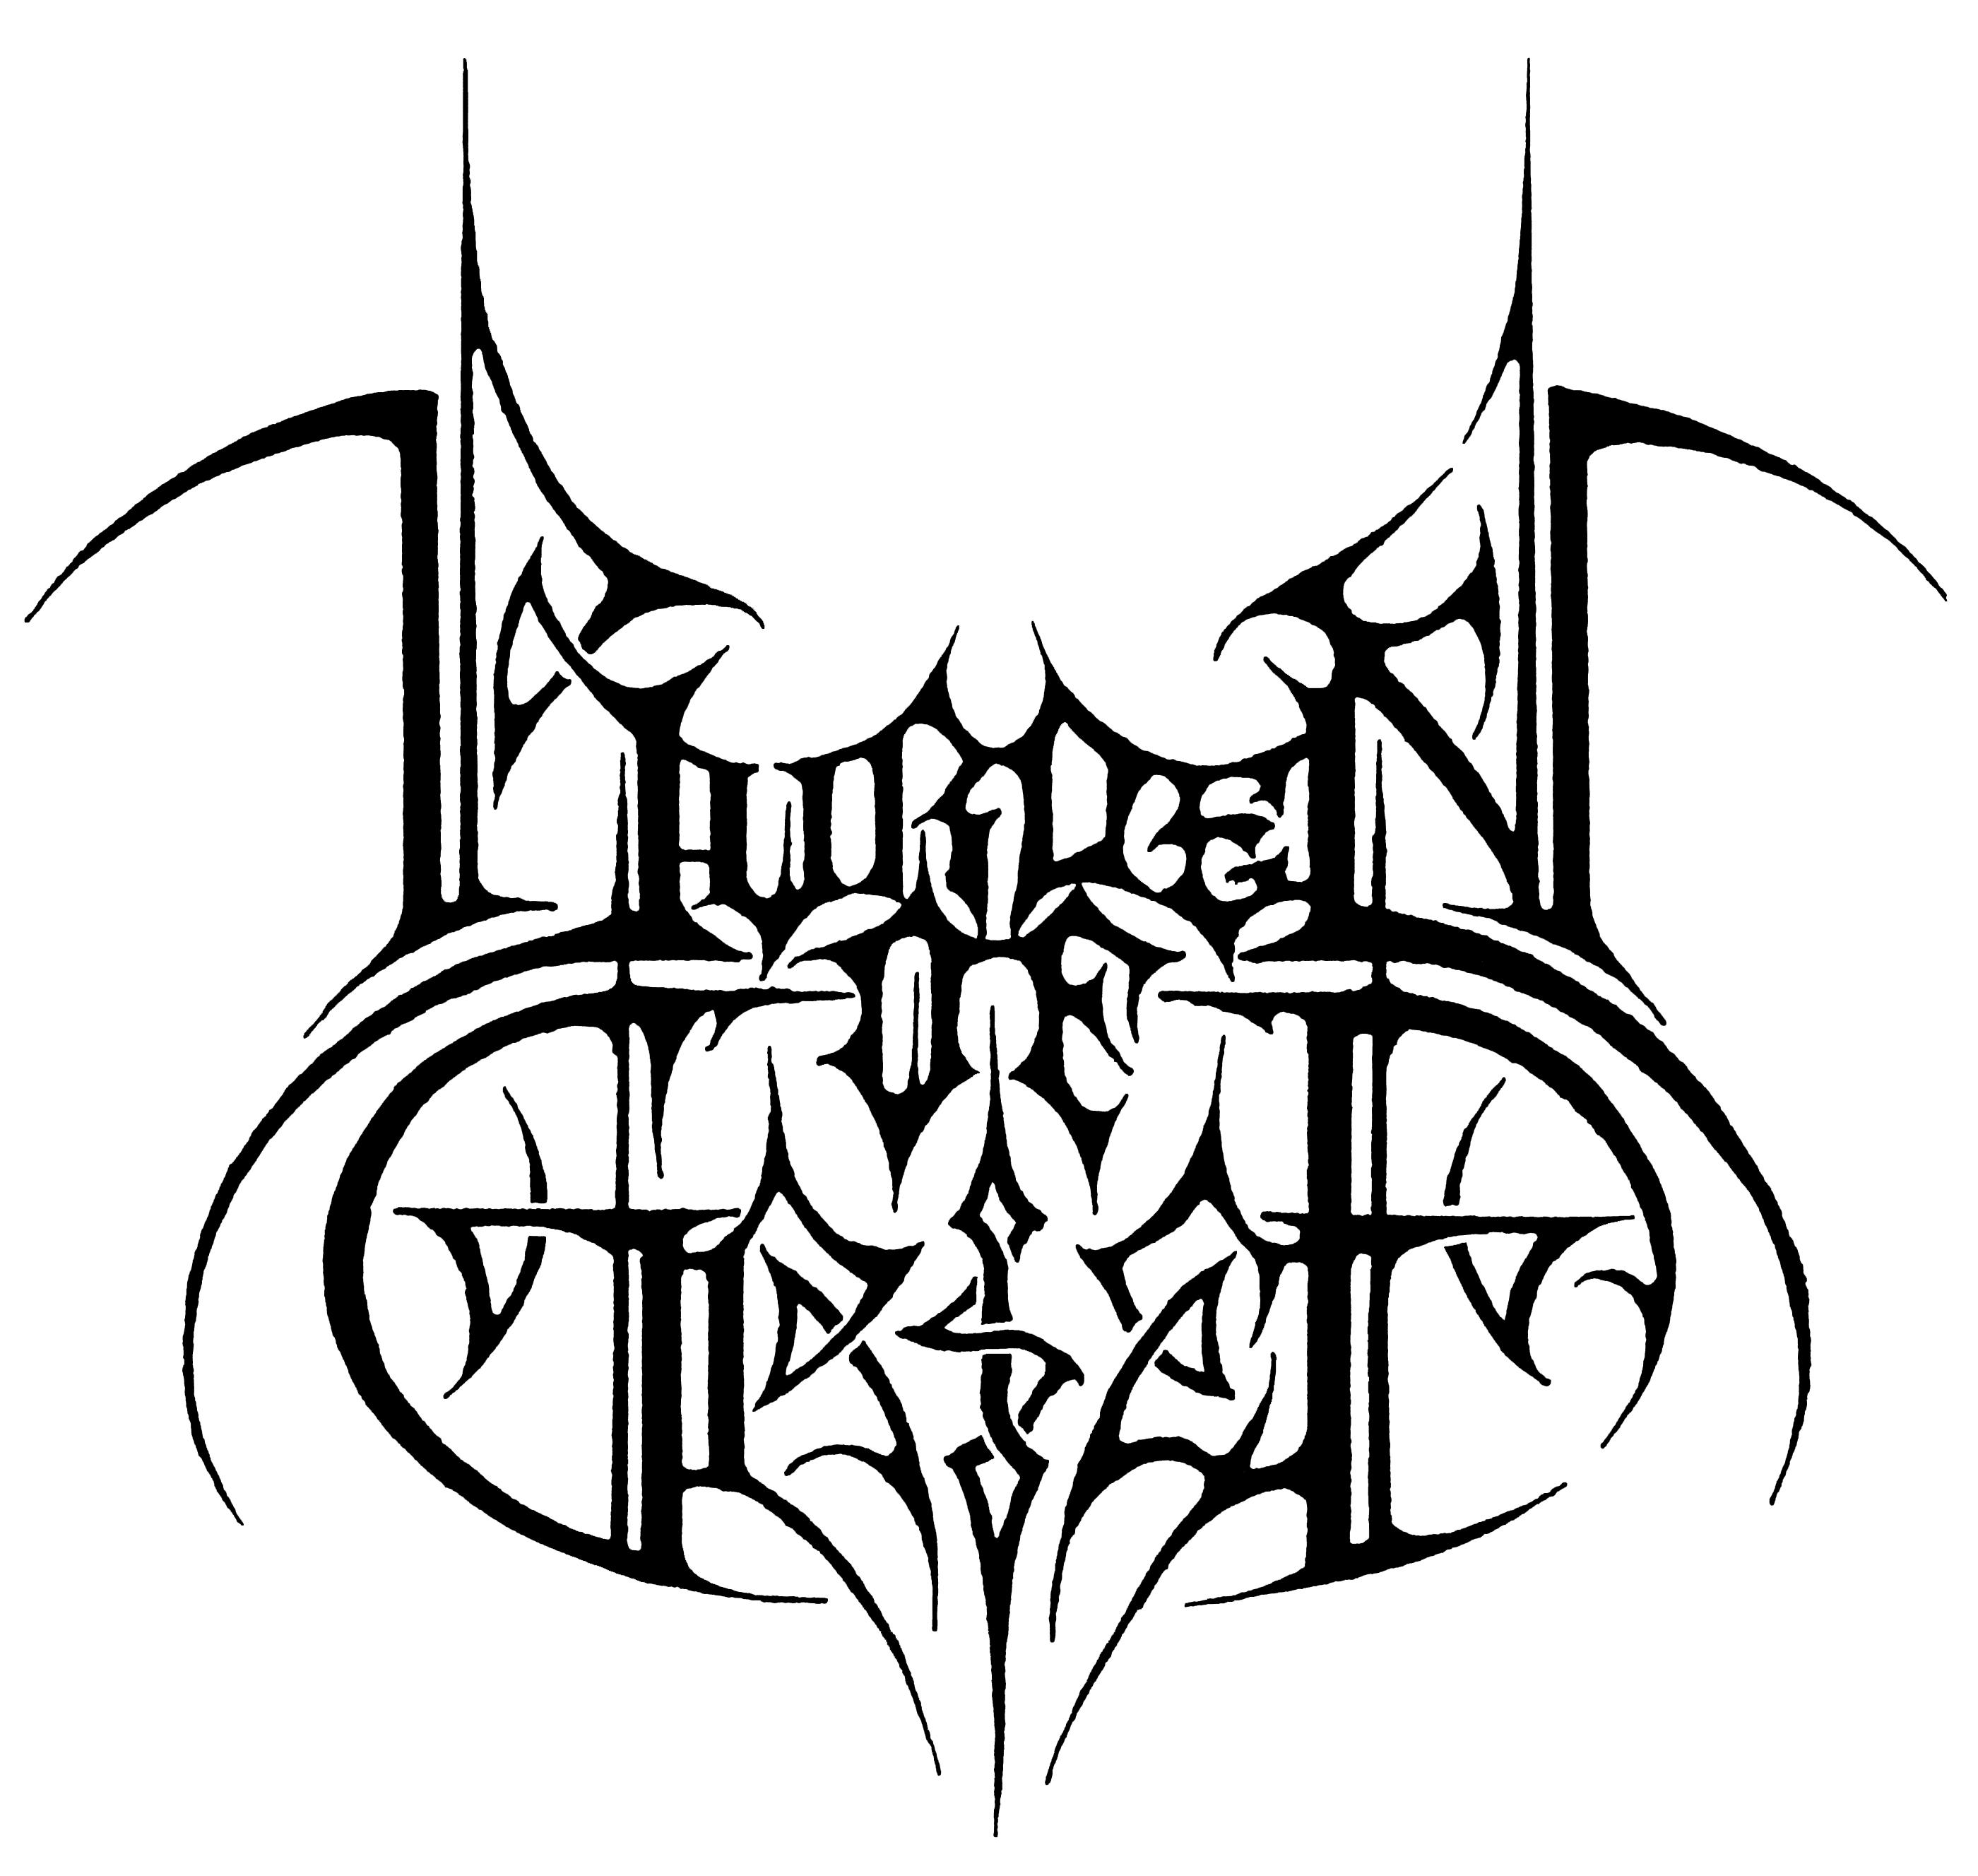 Metal Logo - The perfect form in Black Metal logos